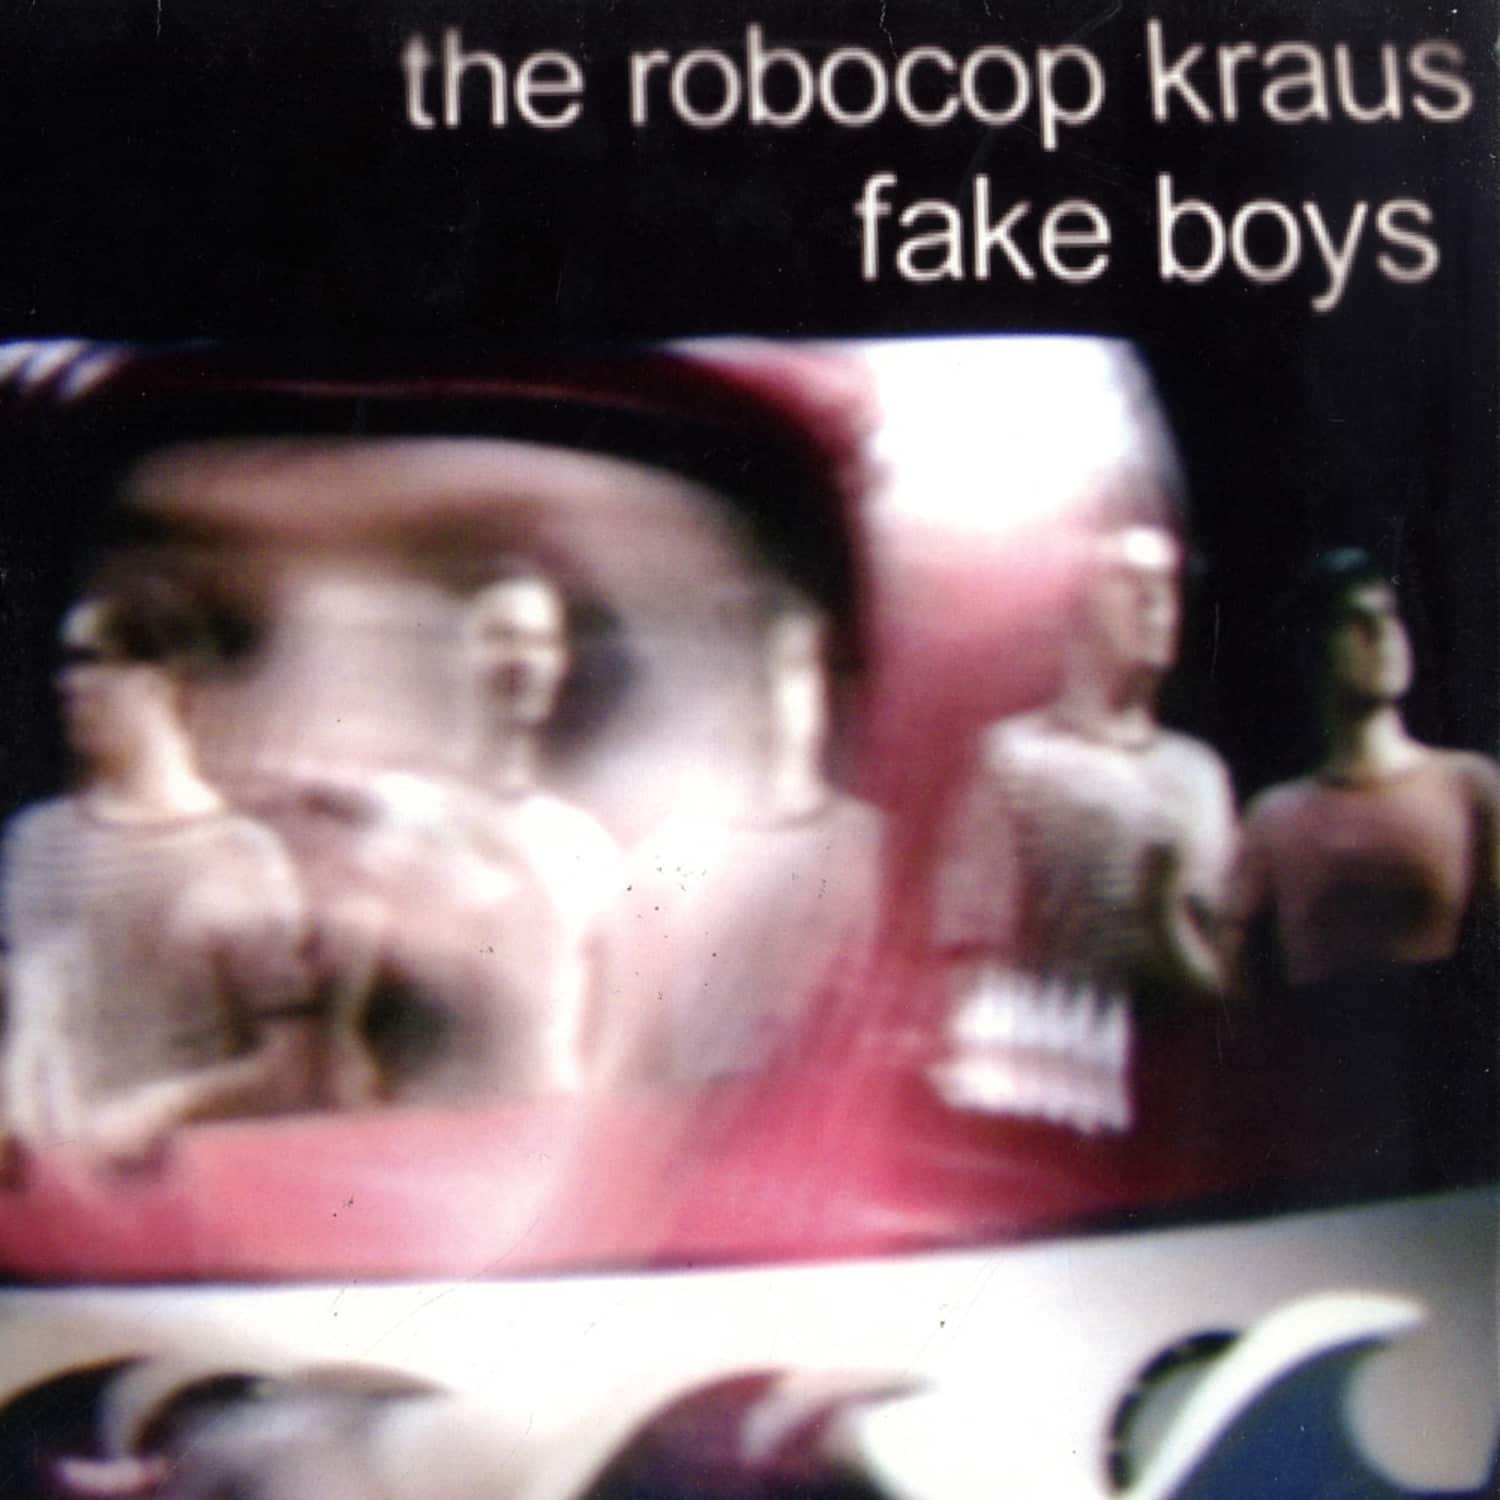 The Robocop Kraus - FAKE BOYS